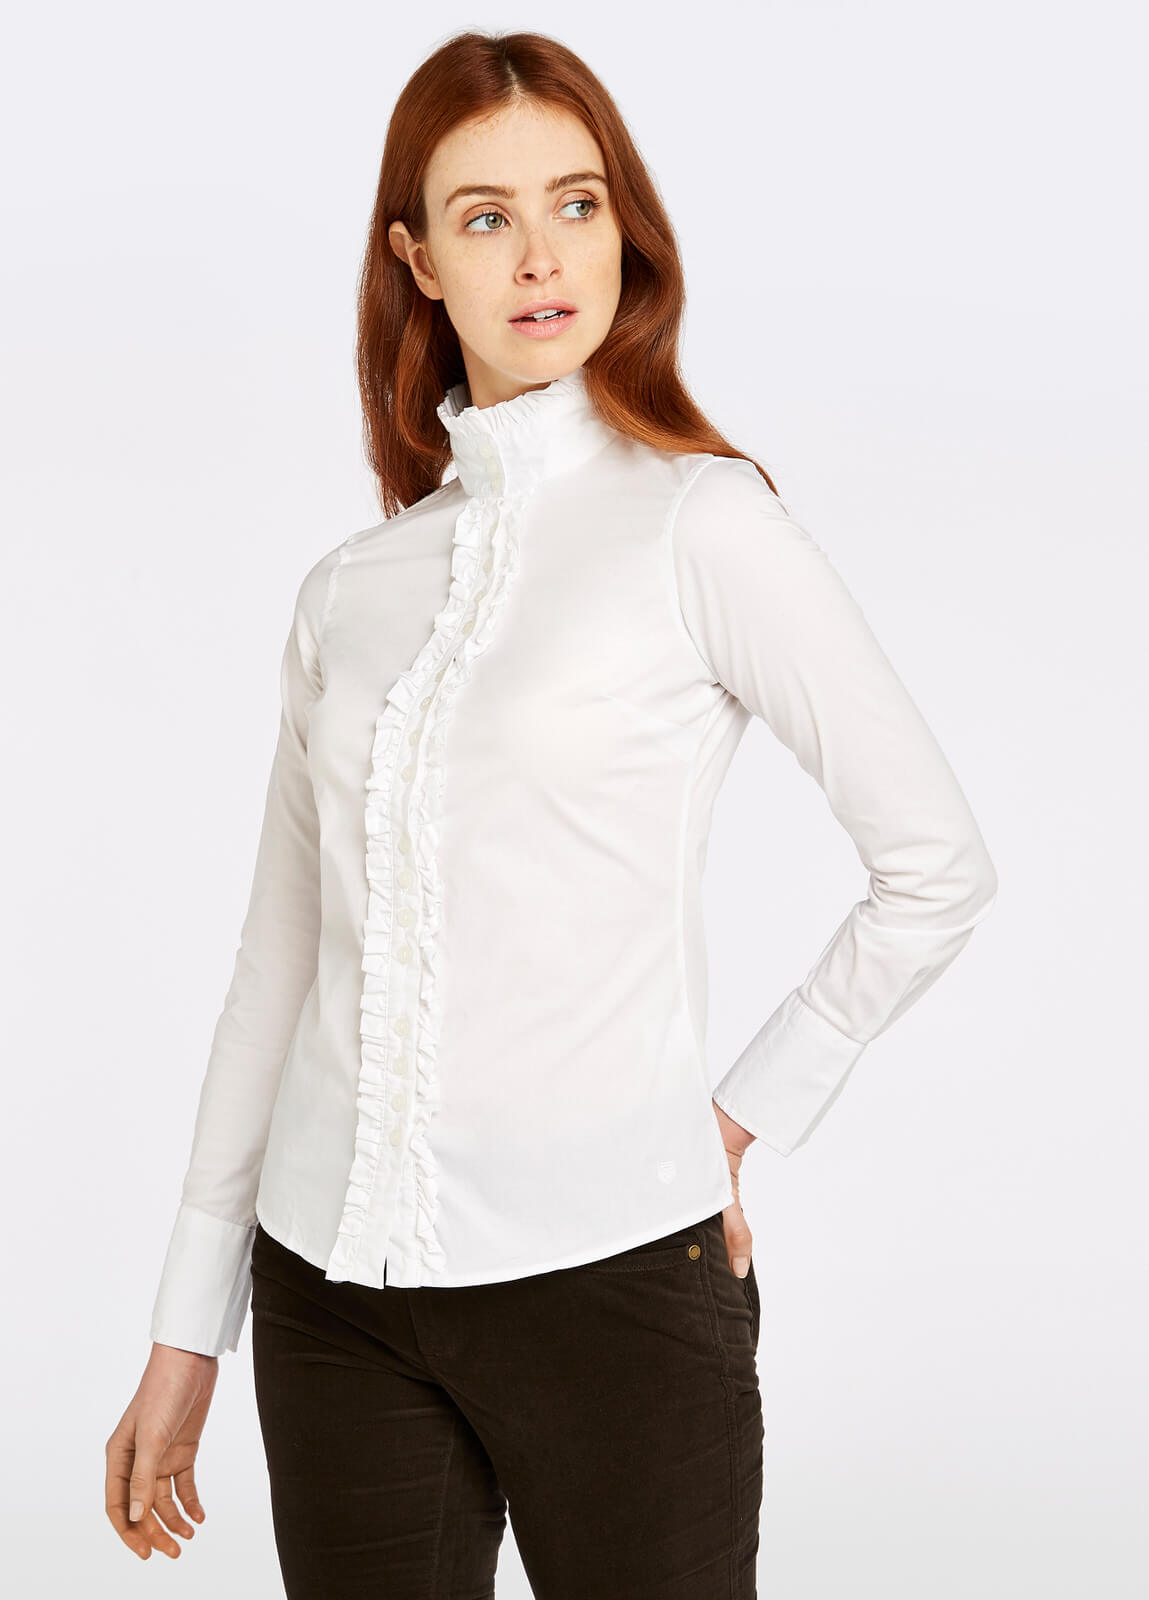 Beautifully designed Dubarry Shirts for Women | Dubarry of Ireland - USA